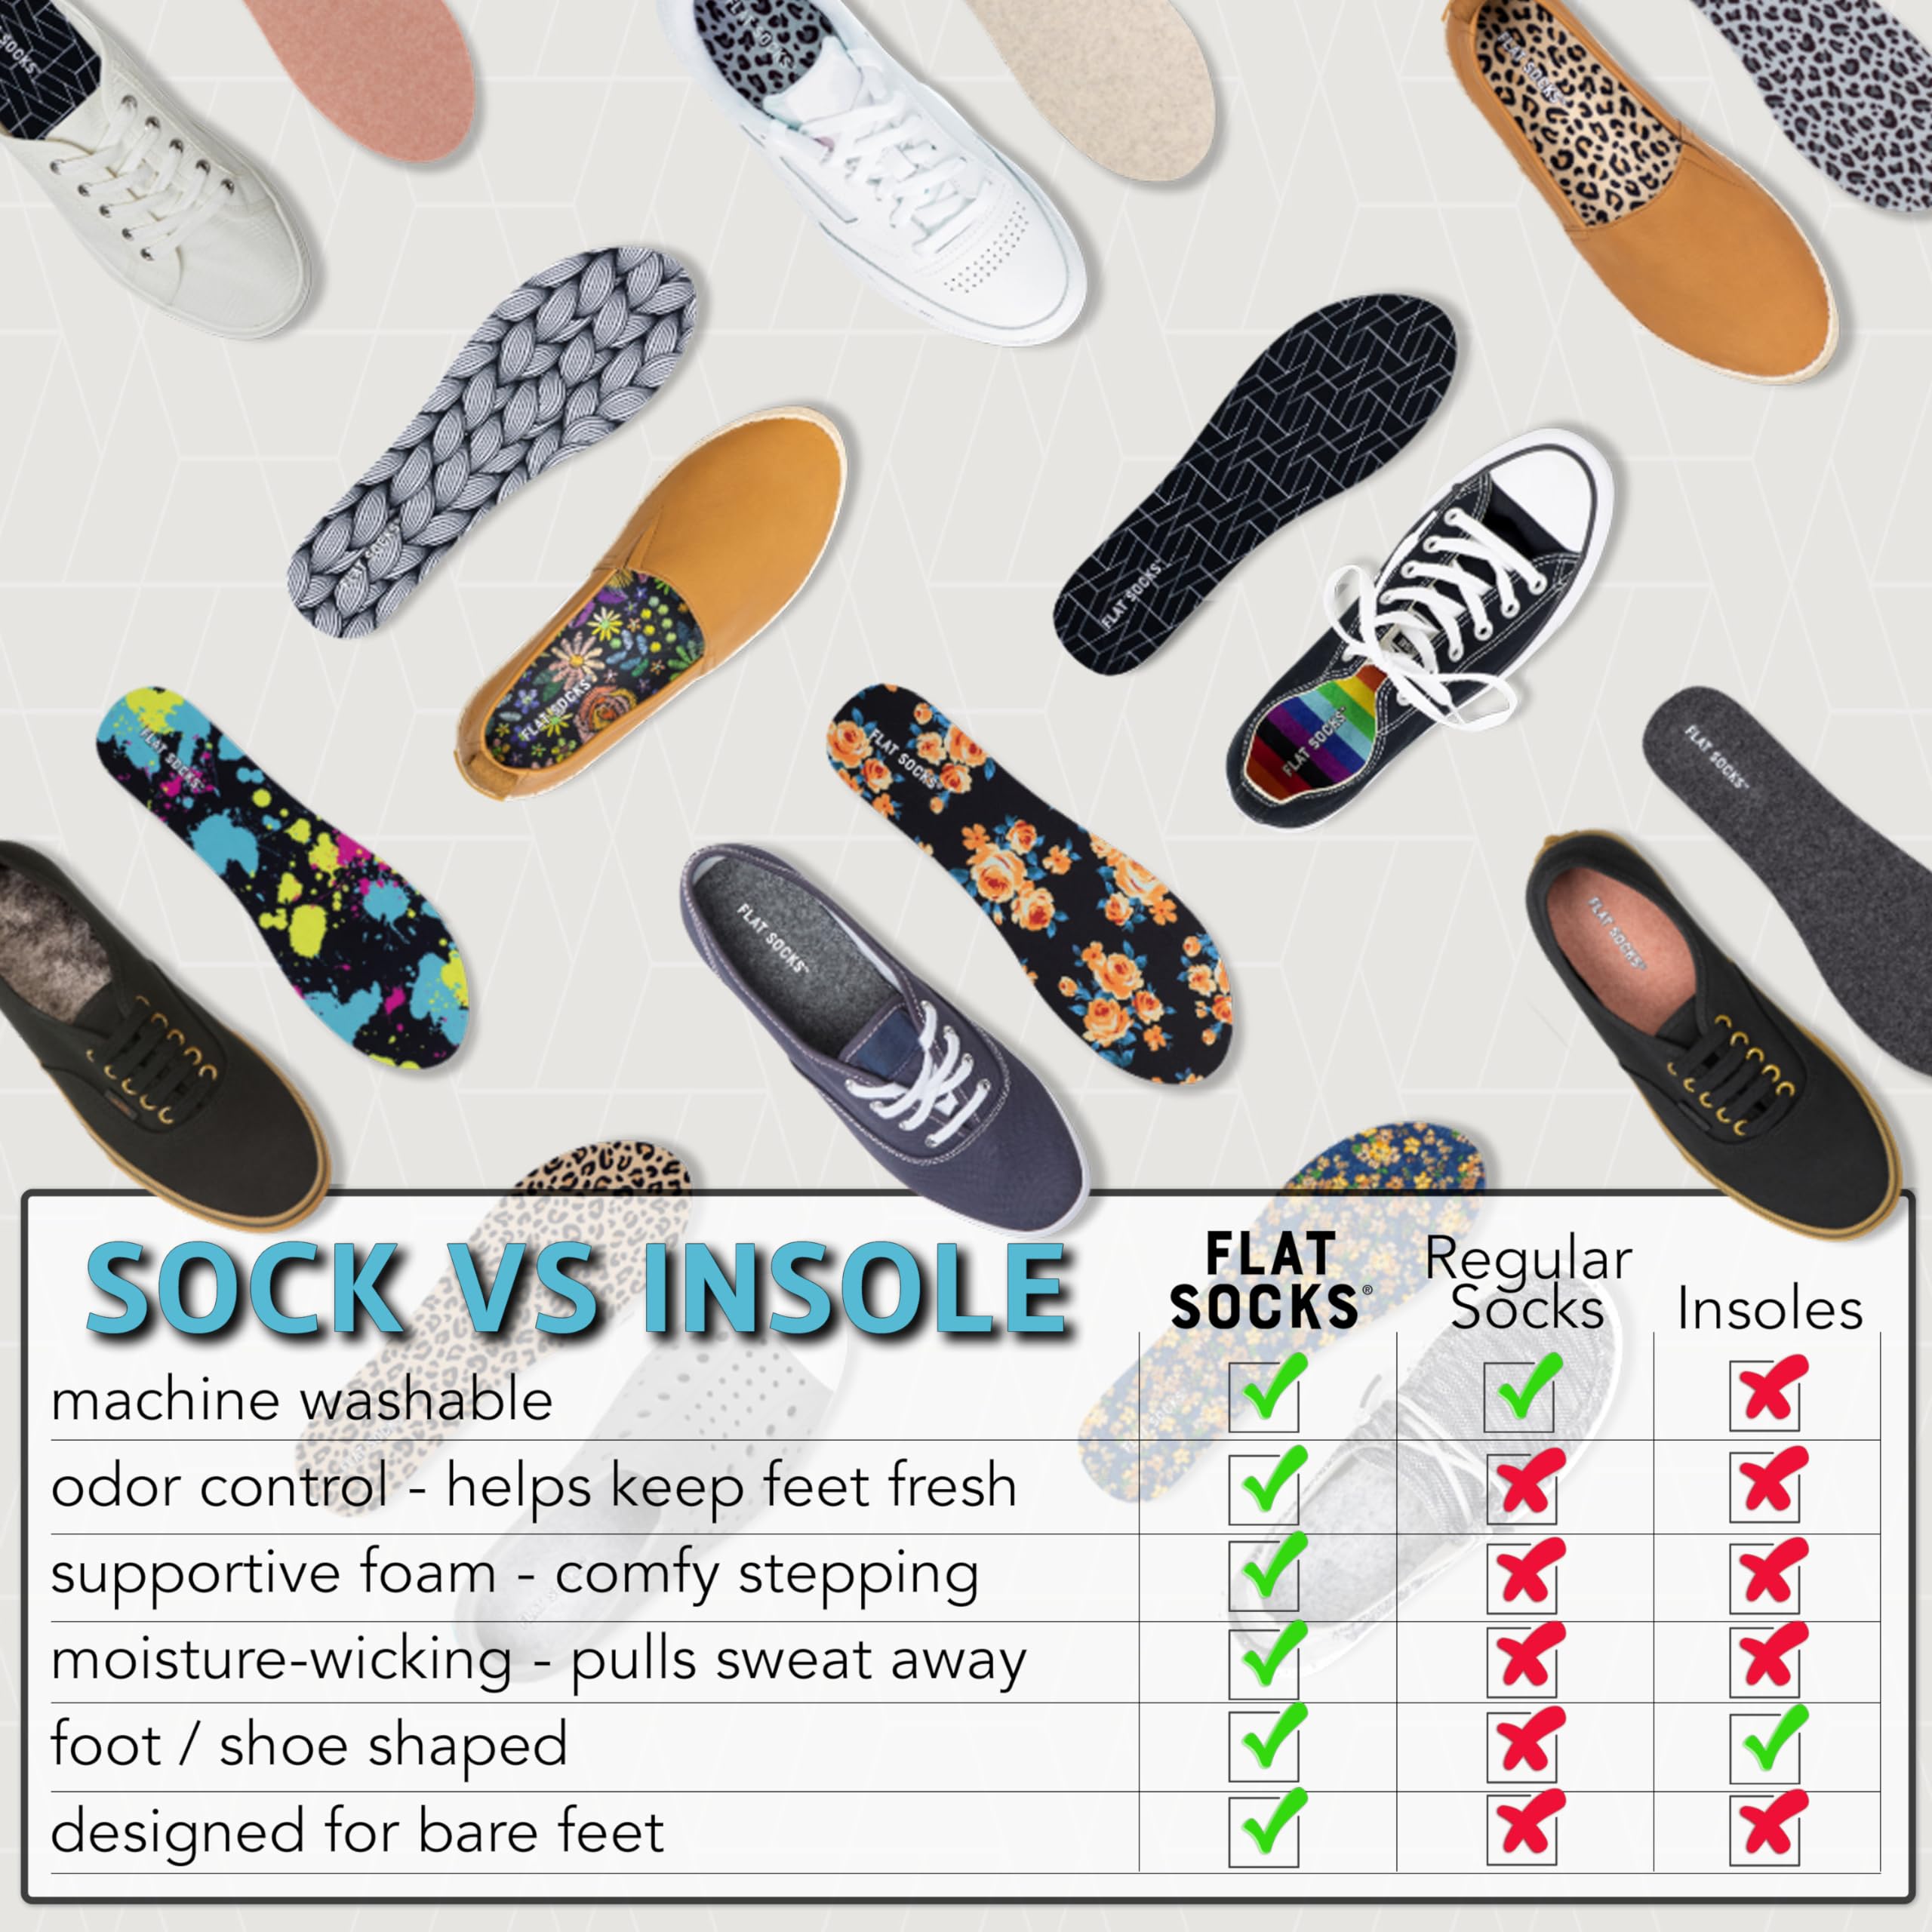 FLAT SOCKS Womens No Show Socks, Sockless Shoe Liner, No Slipping, No Stinking, Washable Barefoot Shoe Insert, Animal Print